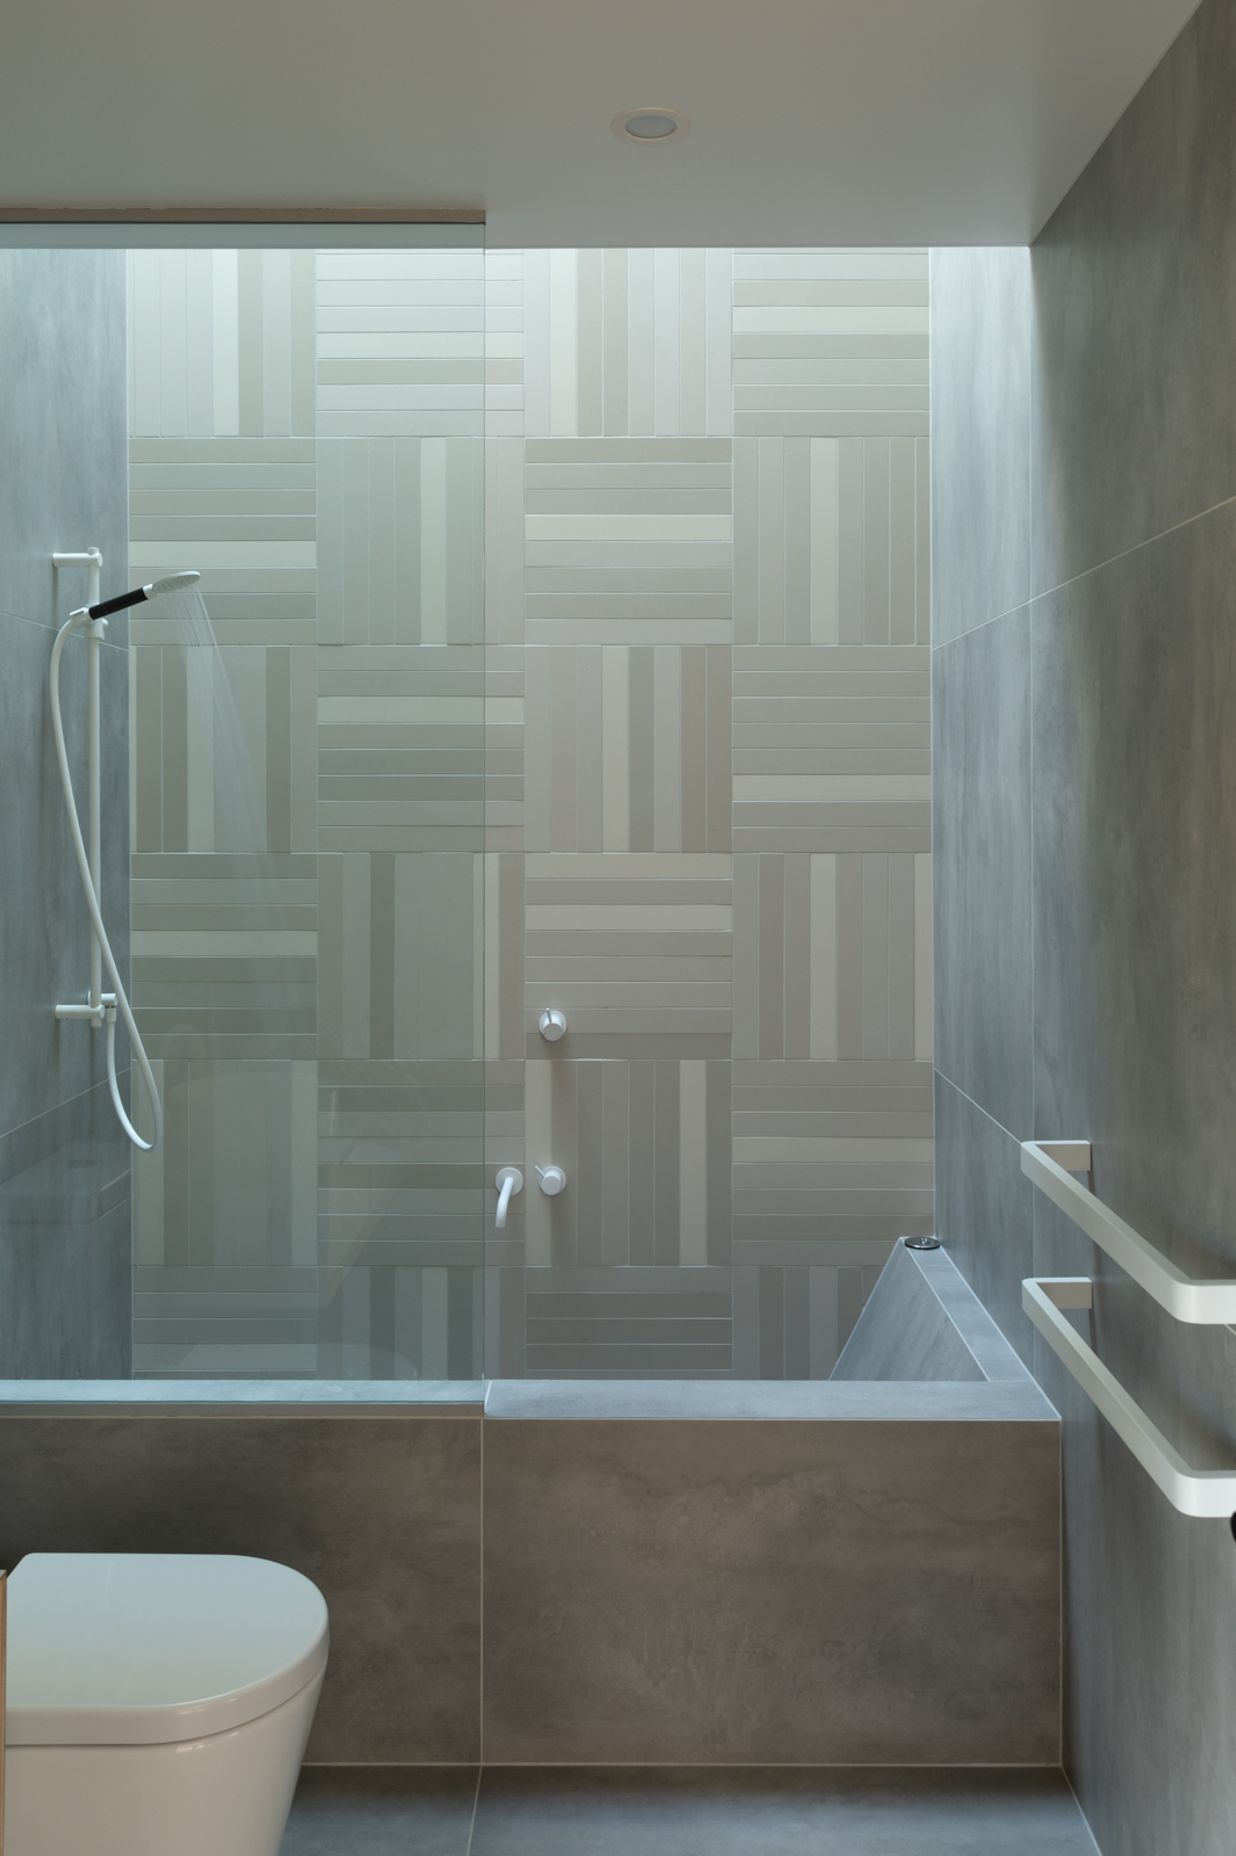 Rectangular mosaic tiles and white tapware create an elegant bathroom.